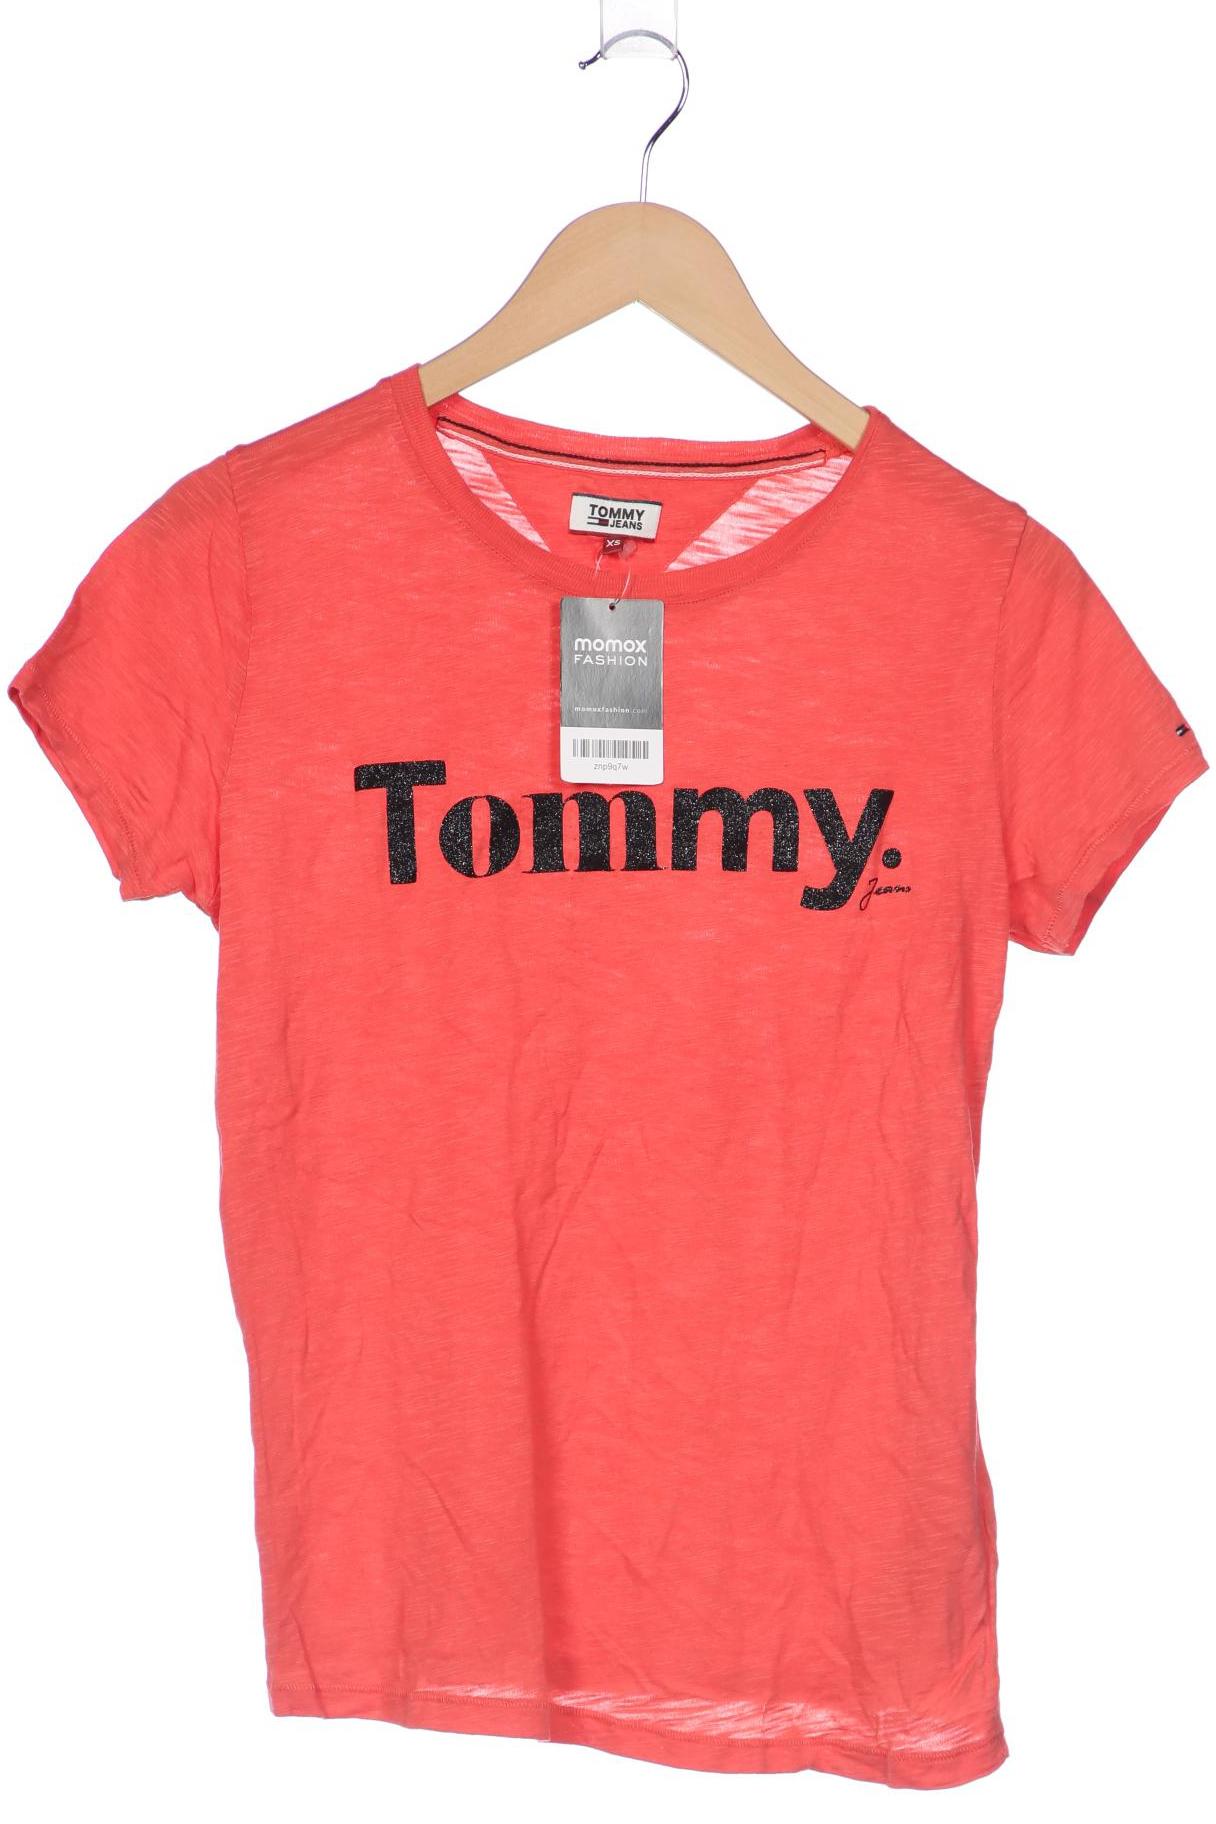 Tommy Jeans Damen T-Shirt, rot, Gr. 34 von Tommy Jeans